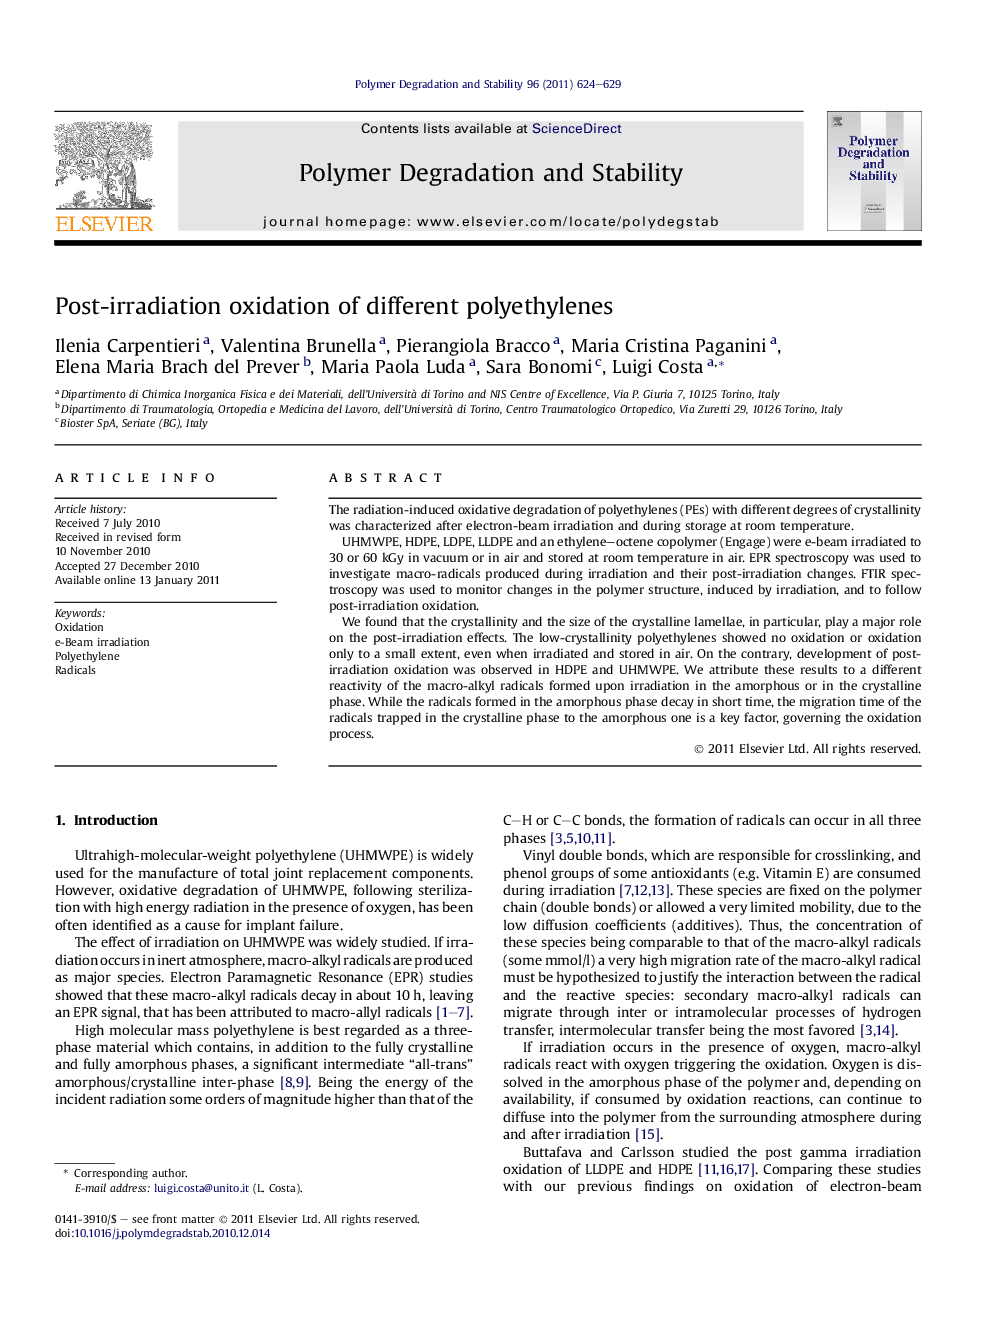 Post-irradiation oxidation of different polyethylenes